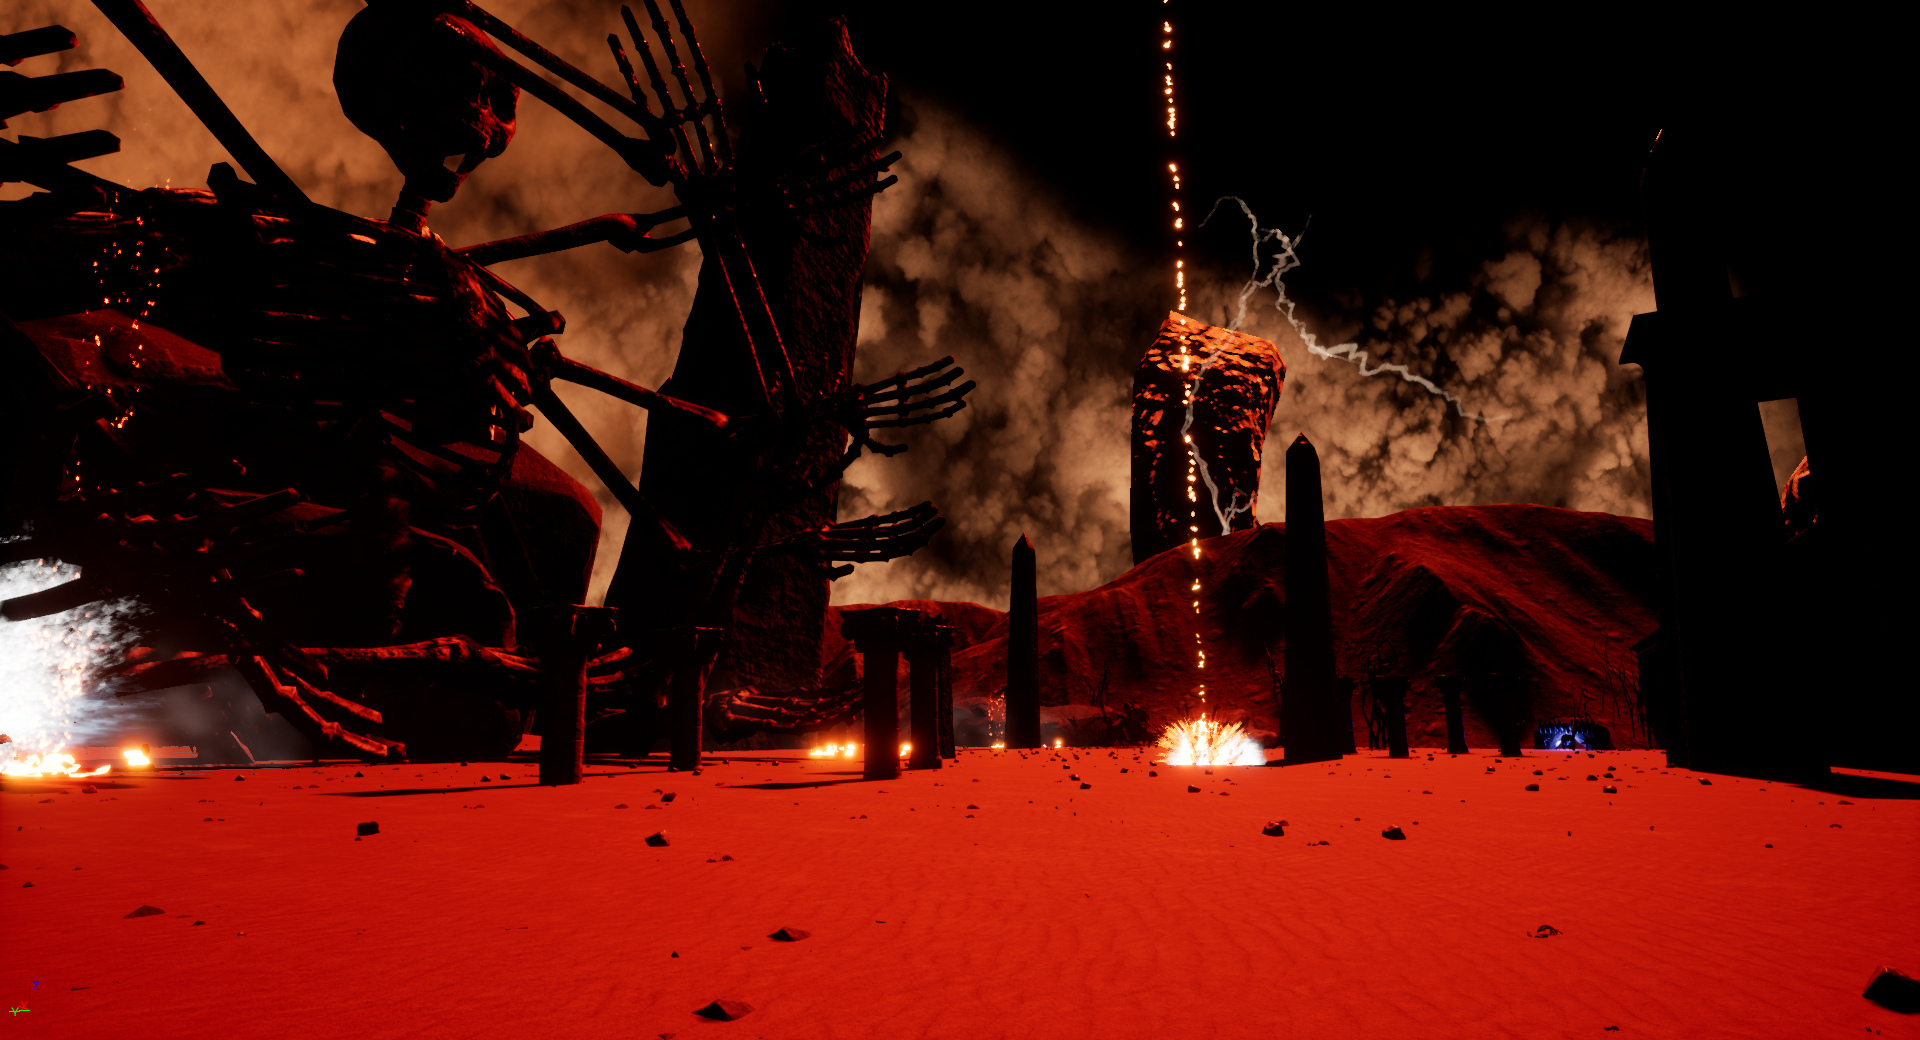 Infernales: Circles of Hell screenshot